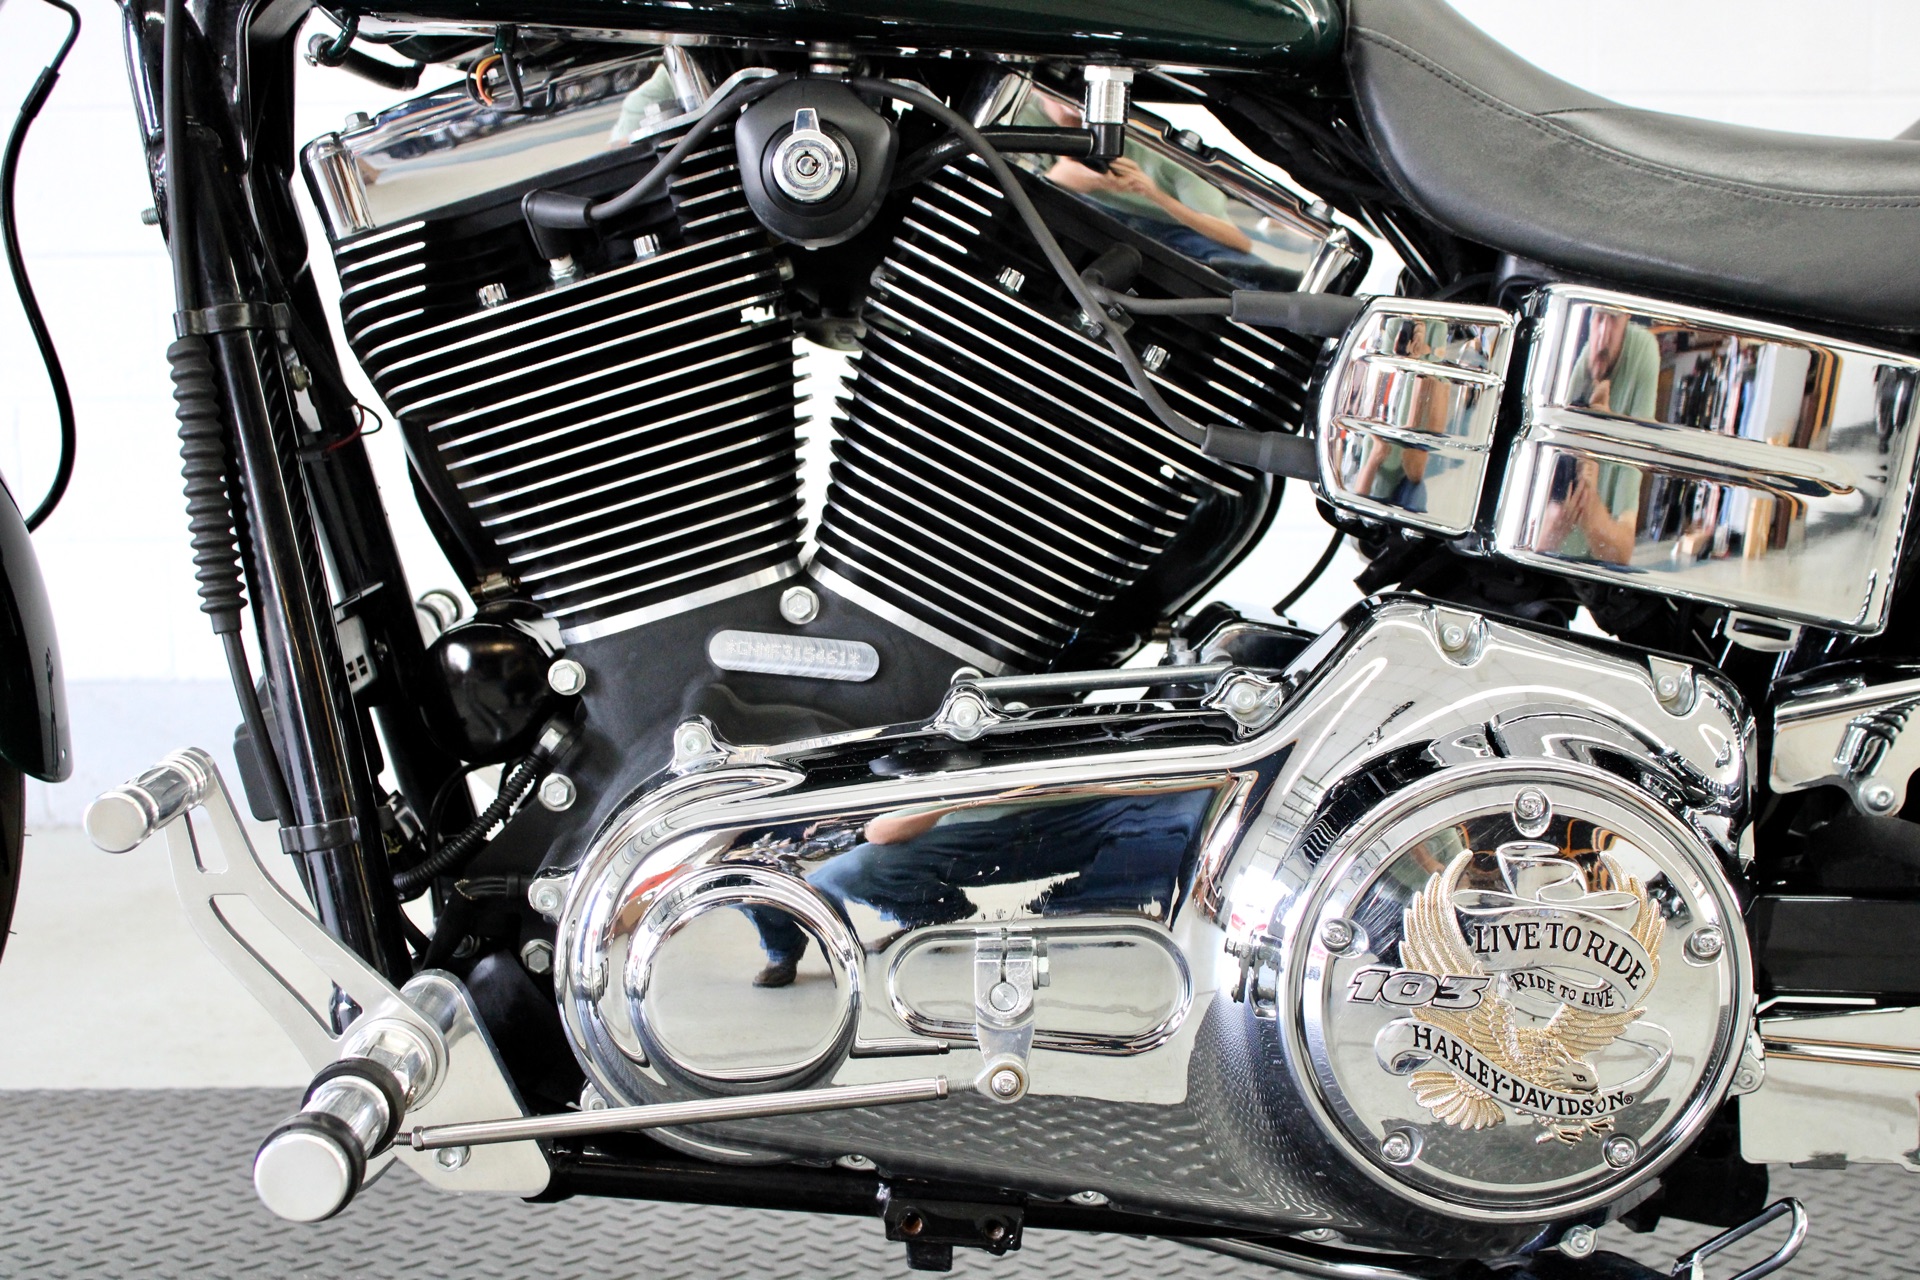 2015 Harley-Davidson Low Rider® in Fredericksburg, Virginia - Photo 19